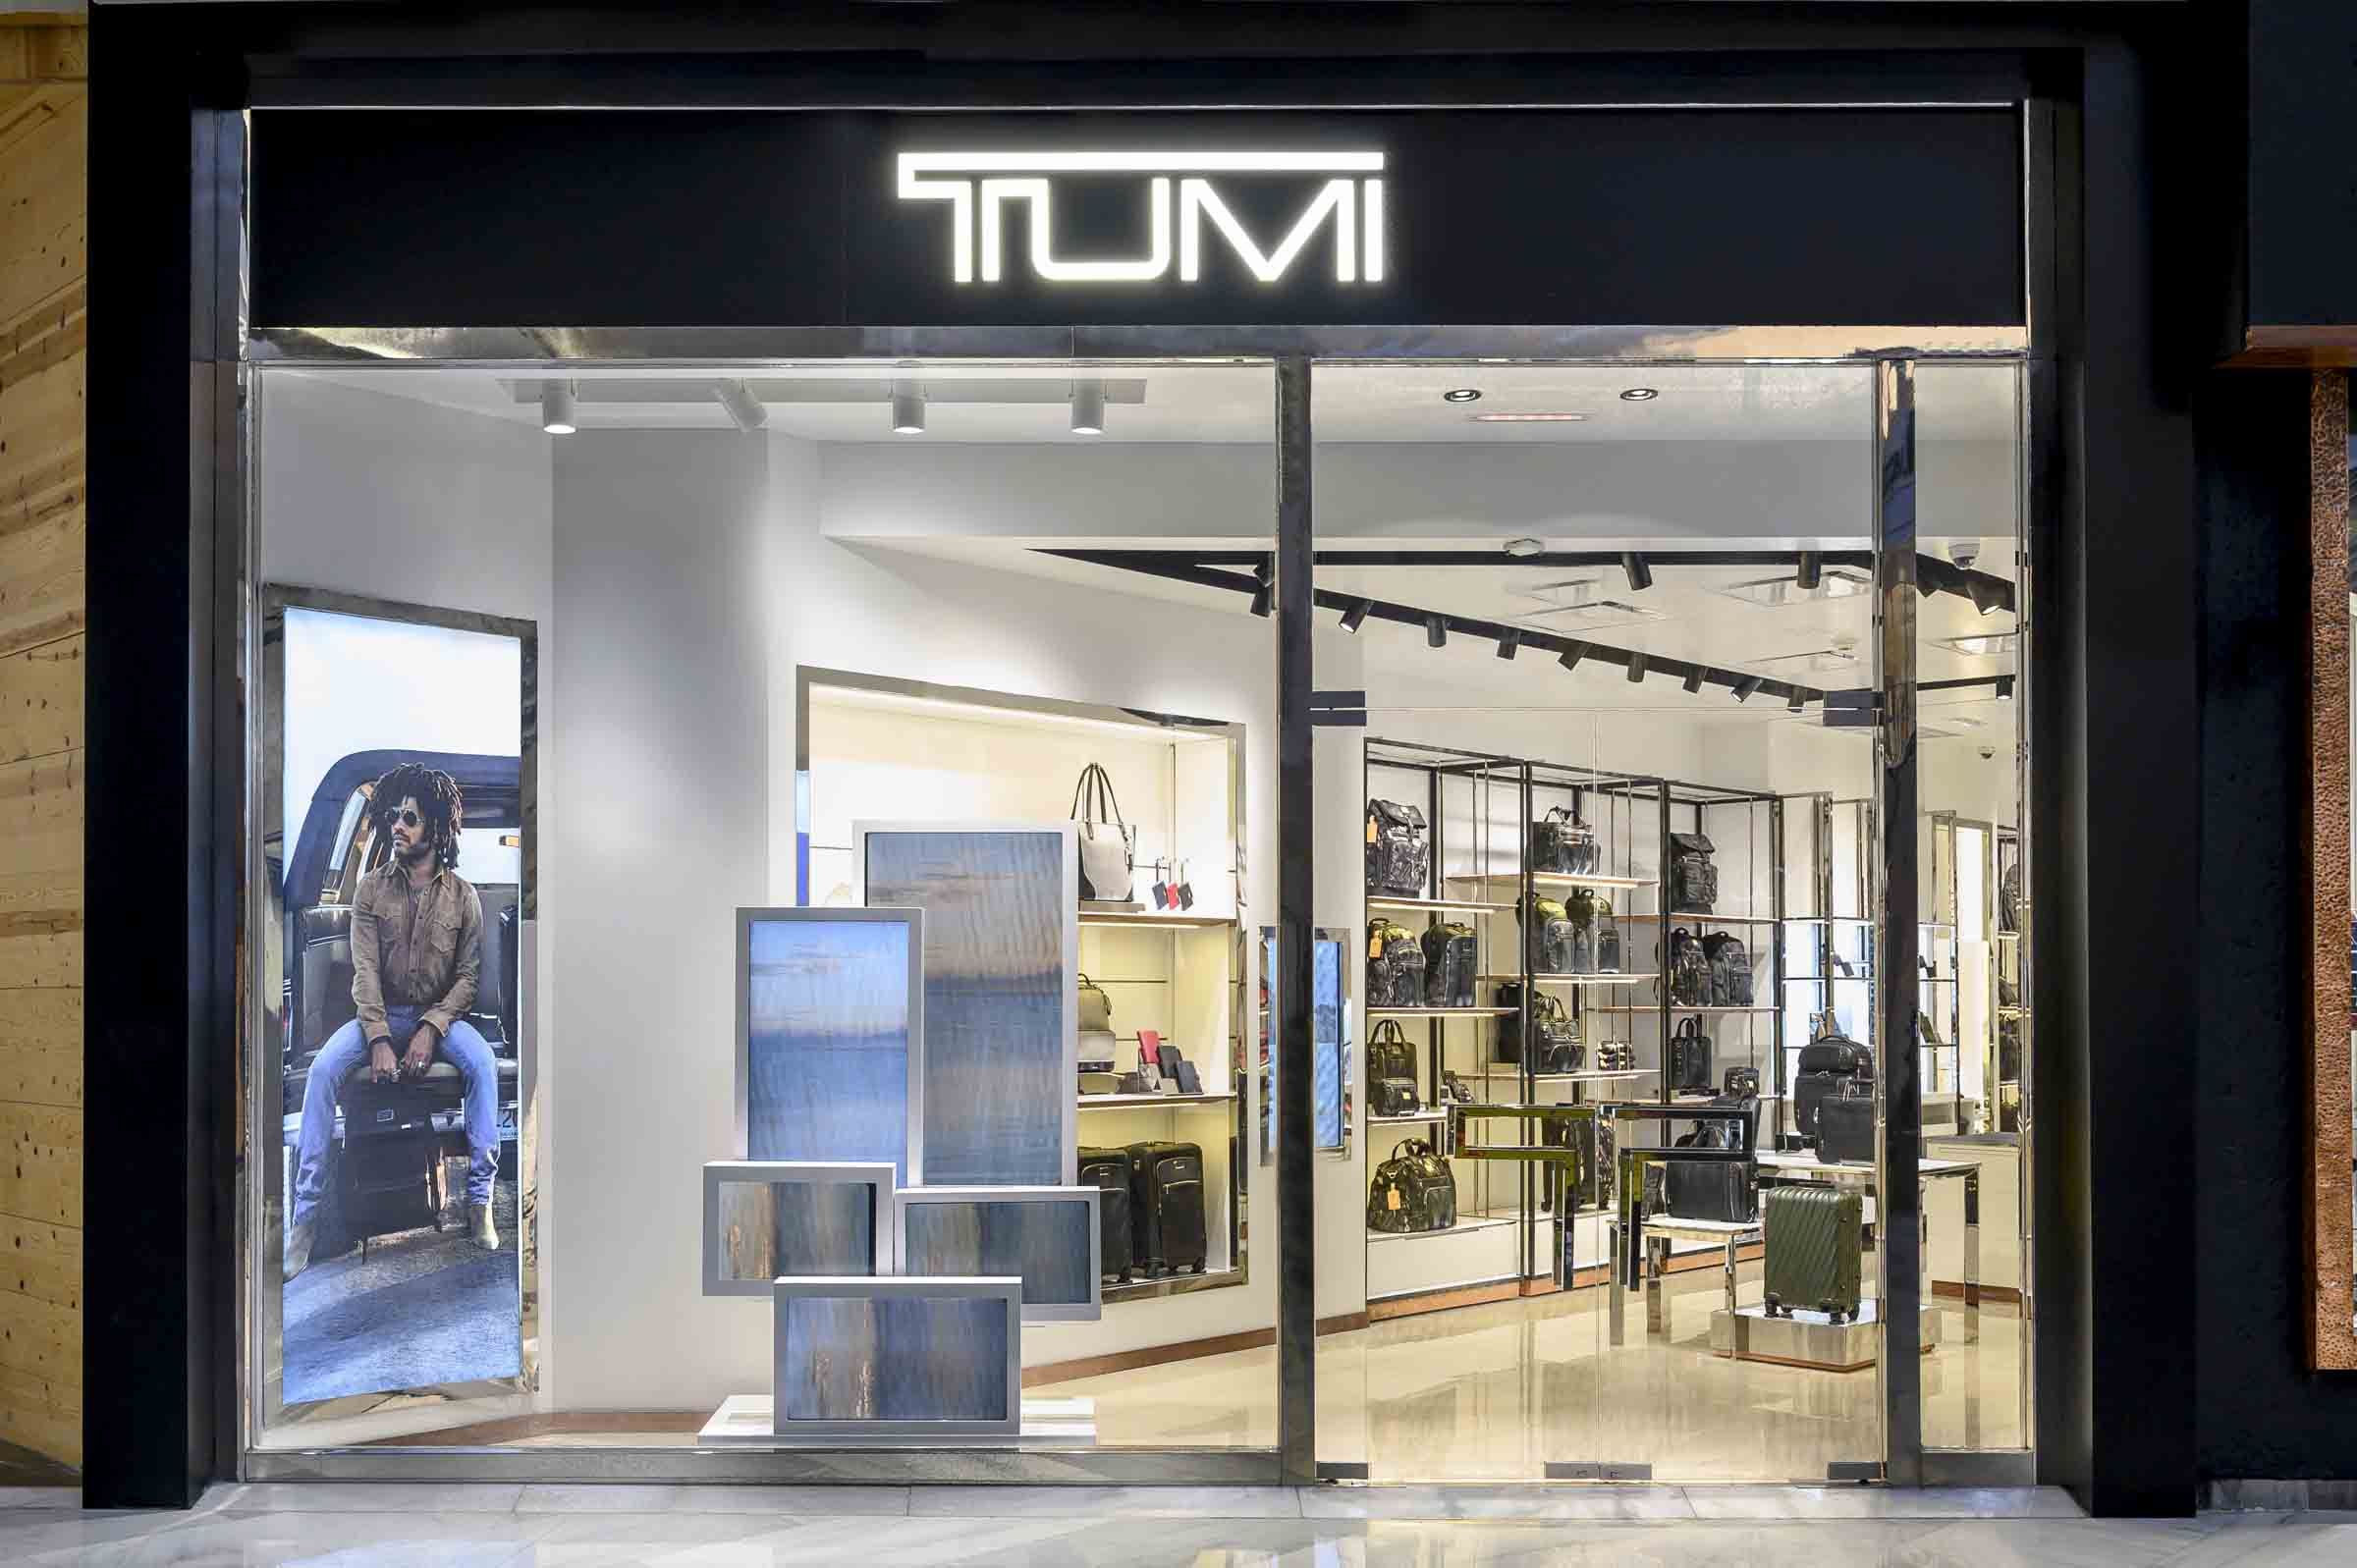 La exclusiva marca de equipaje TUMI llega a Perisur